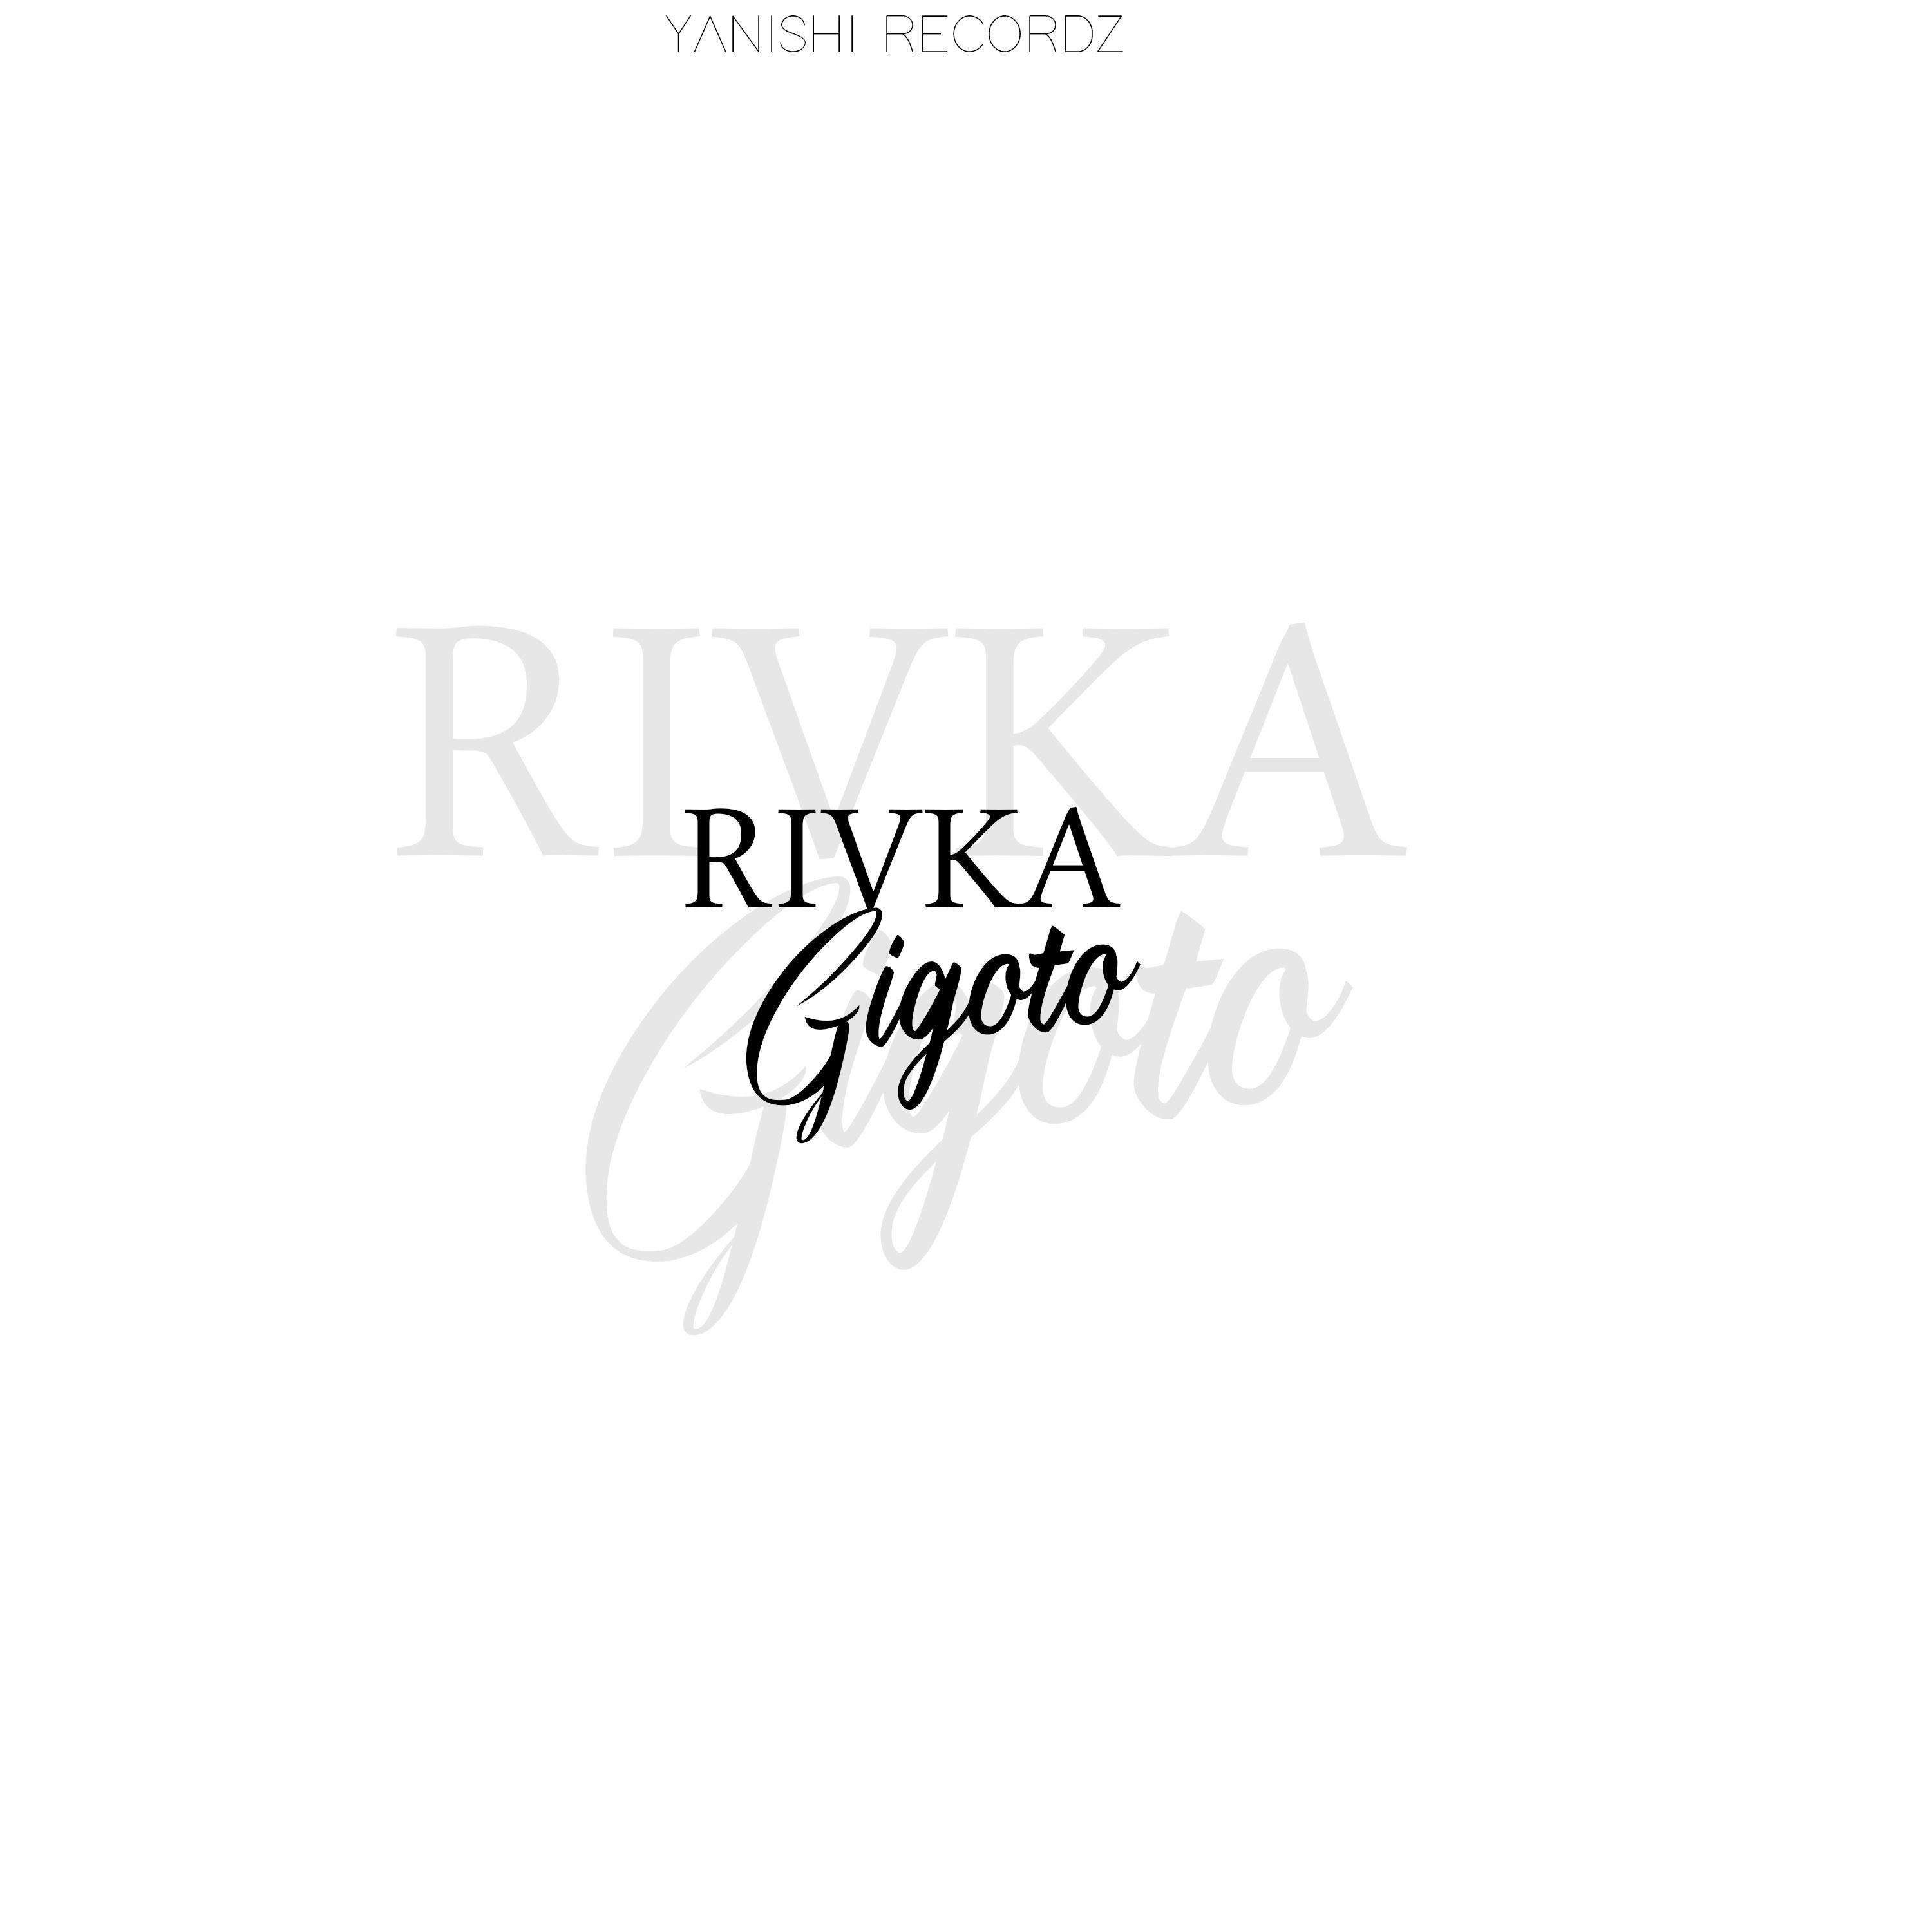 Rivka - Gigoto